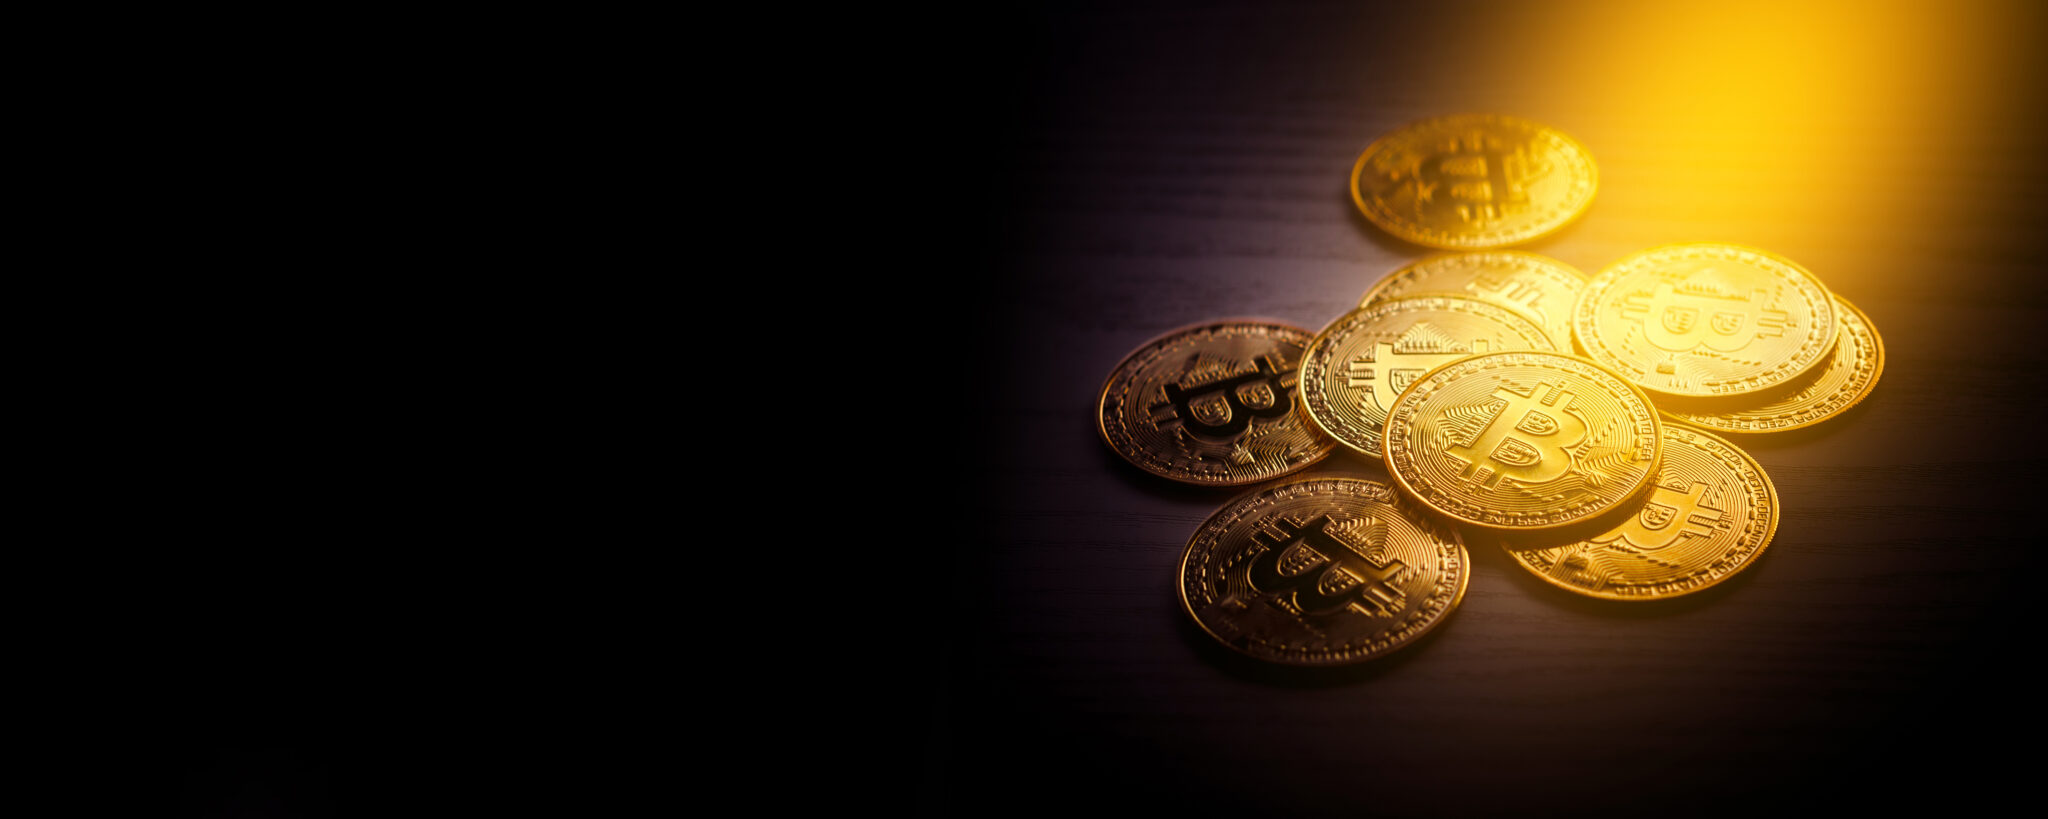 Crypto currency Gold Bitcoin, BTC, Bit Coin. Blockchain